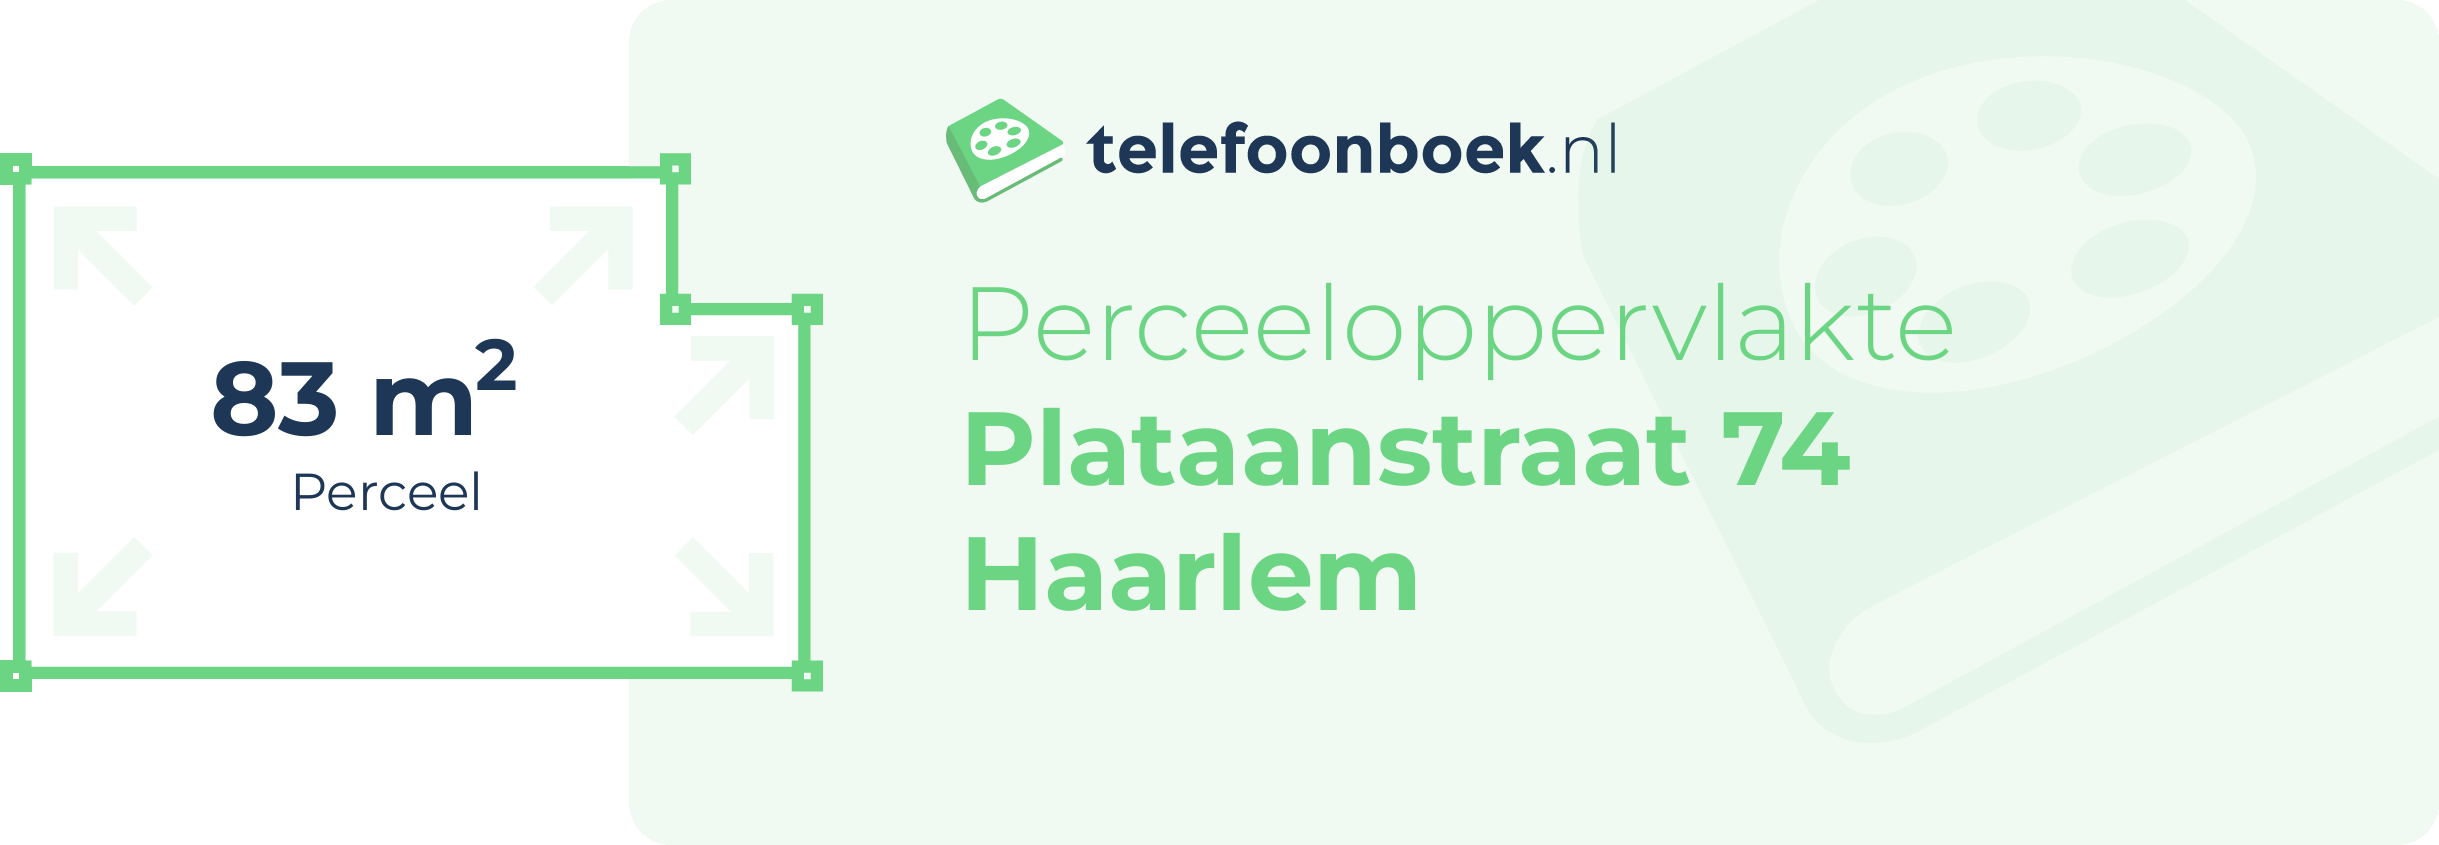 Perceeloppervlakte Plataanstraat 74 Haarlem